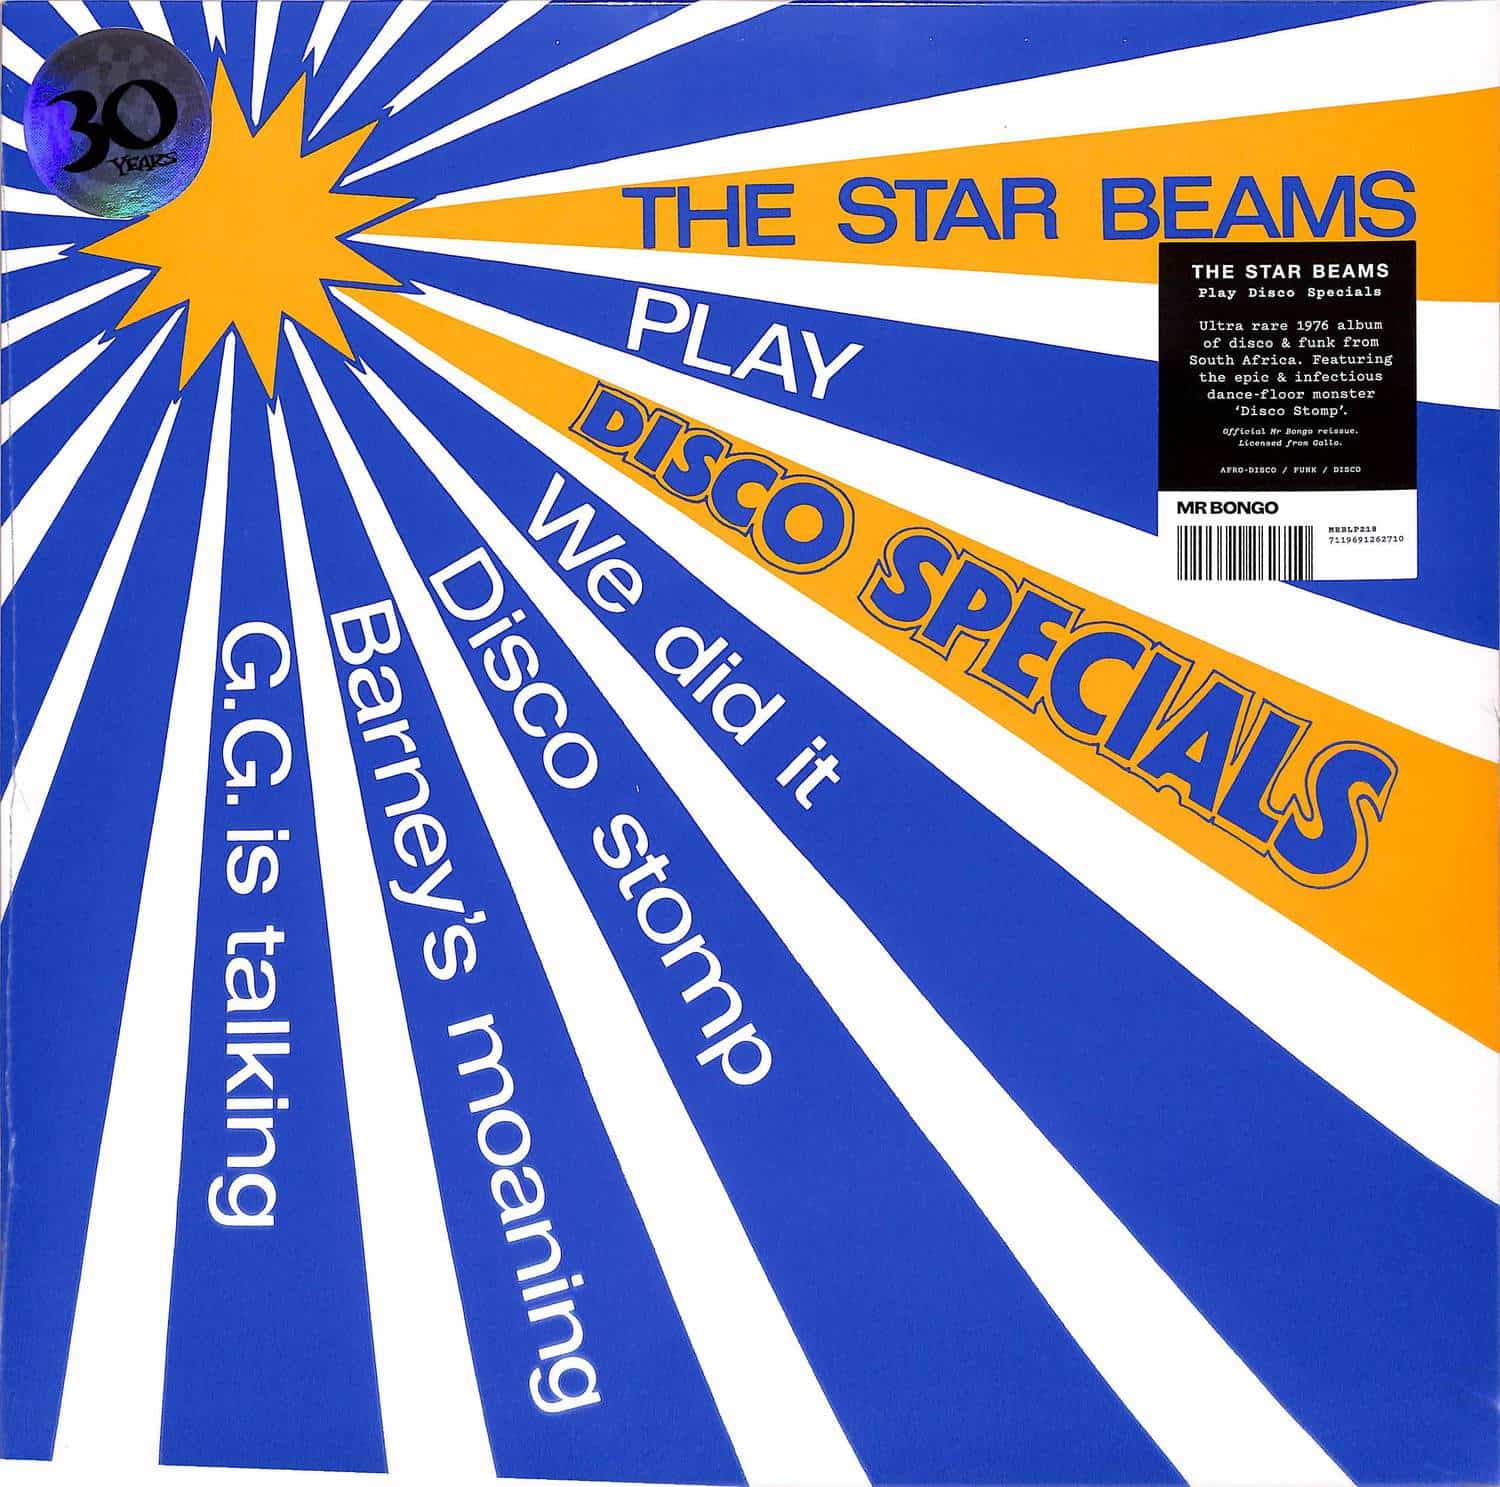 The Star Beams - PLAY DISCO SPECIALS 